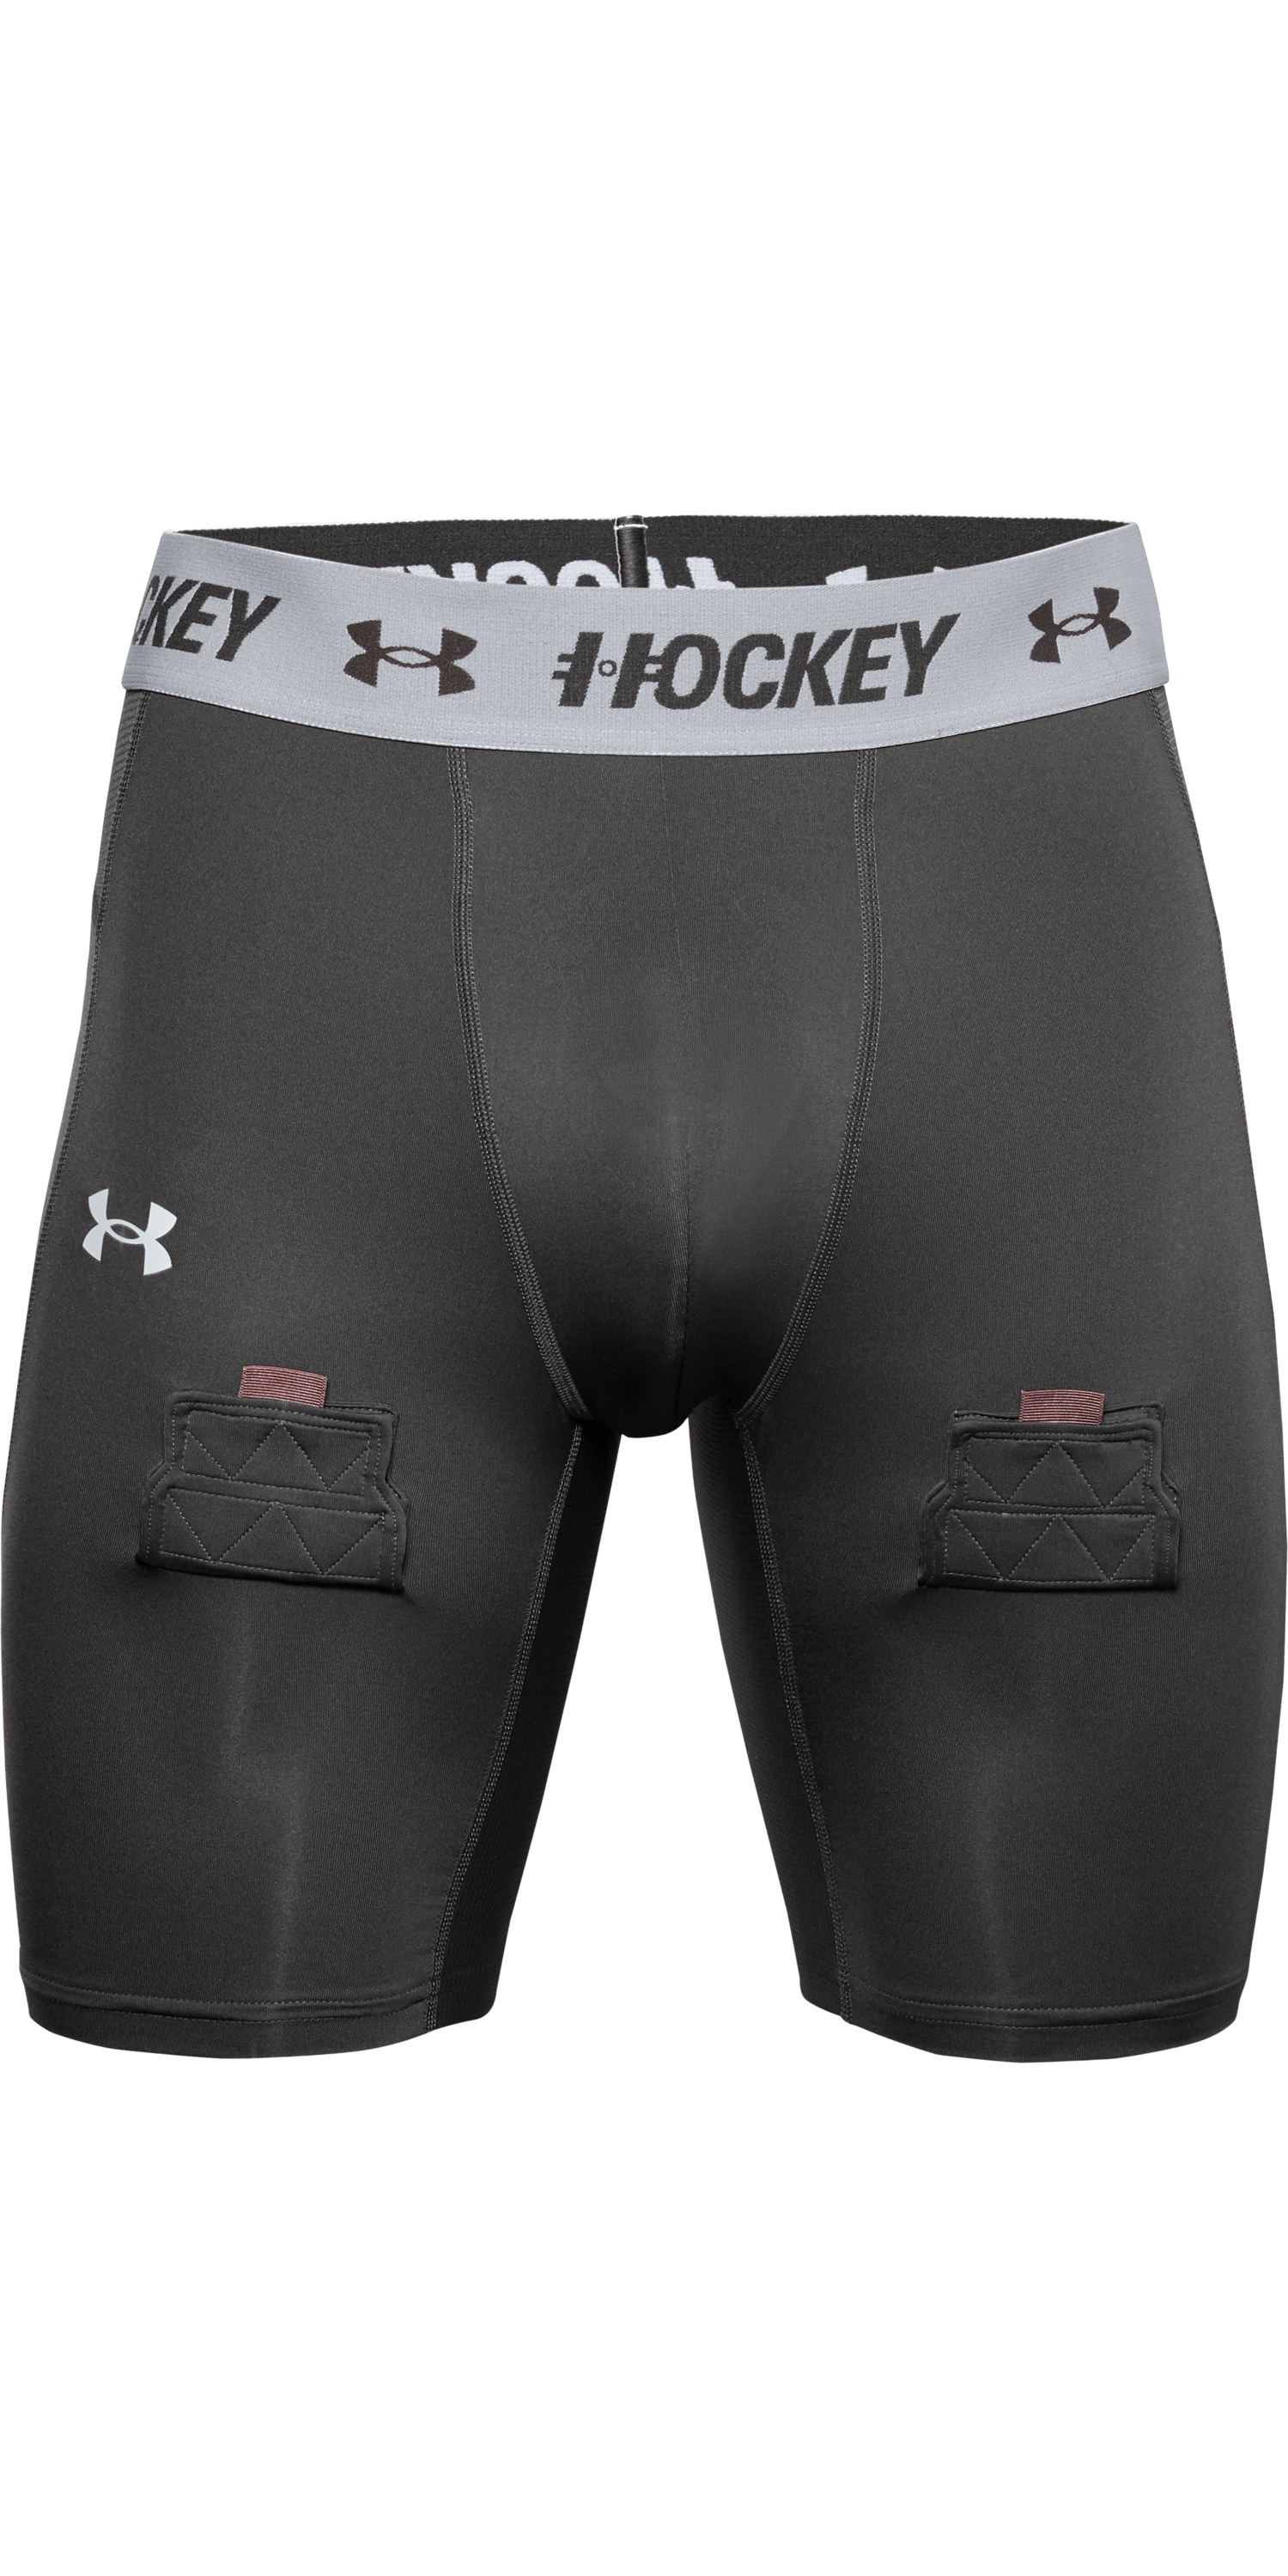  Under Armour Men's Hockey Compression Shorts , Jet